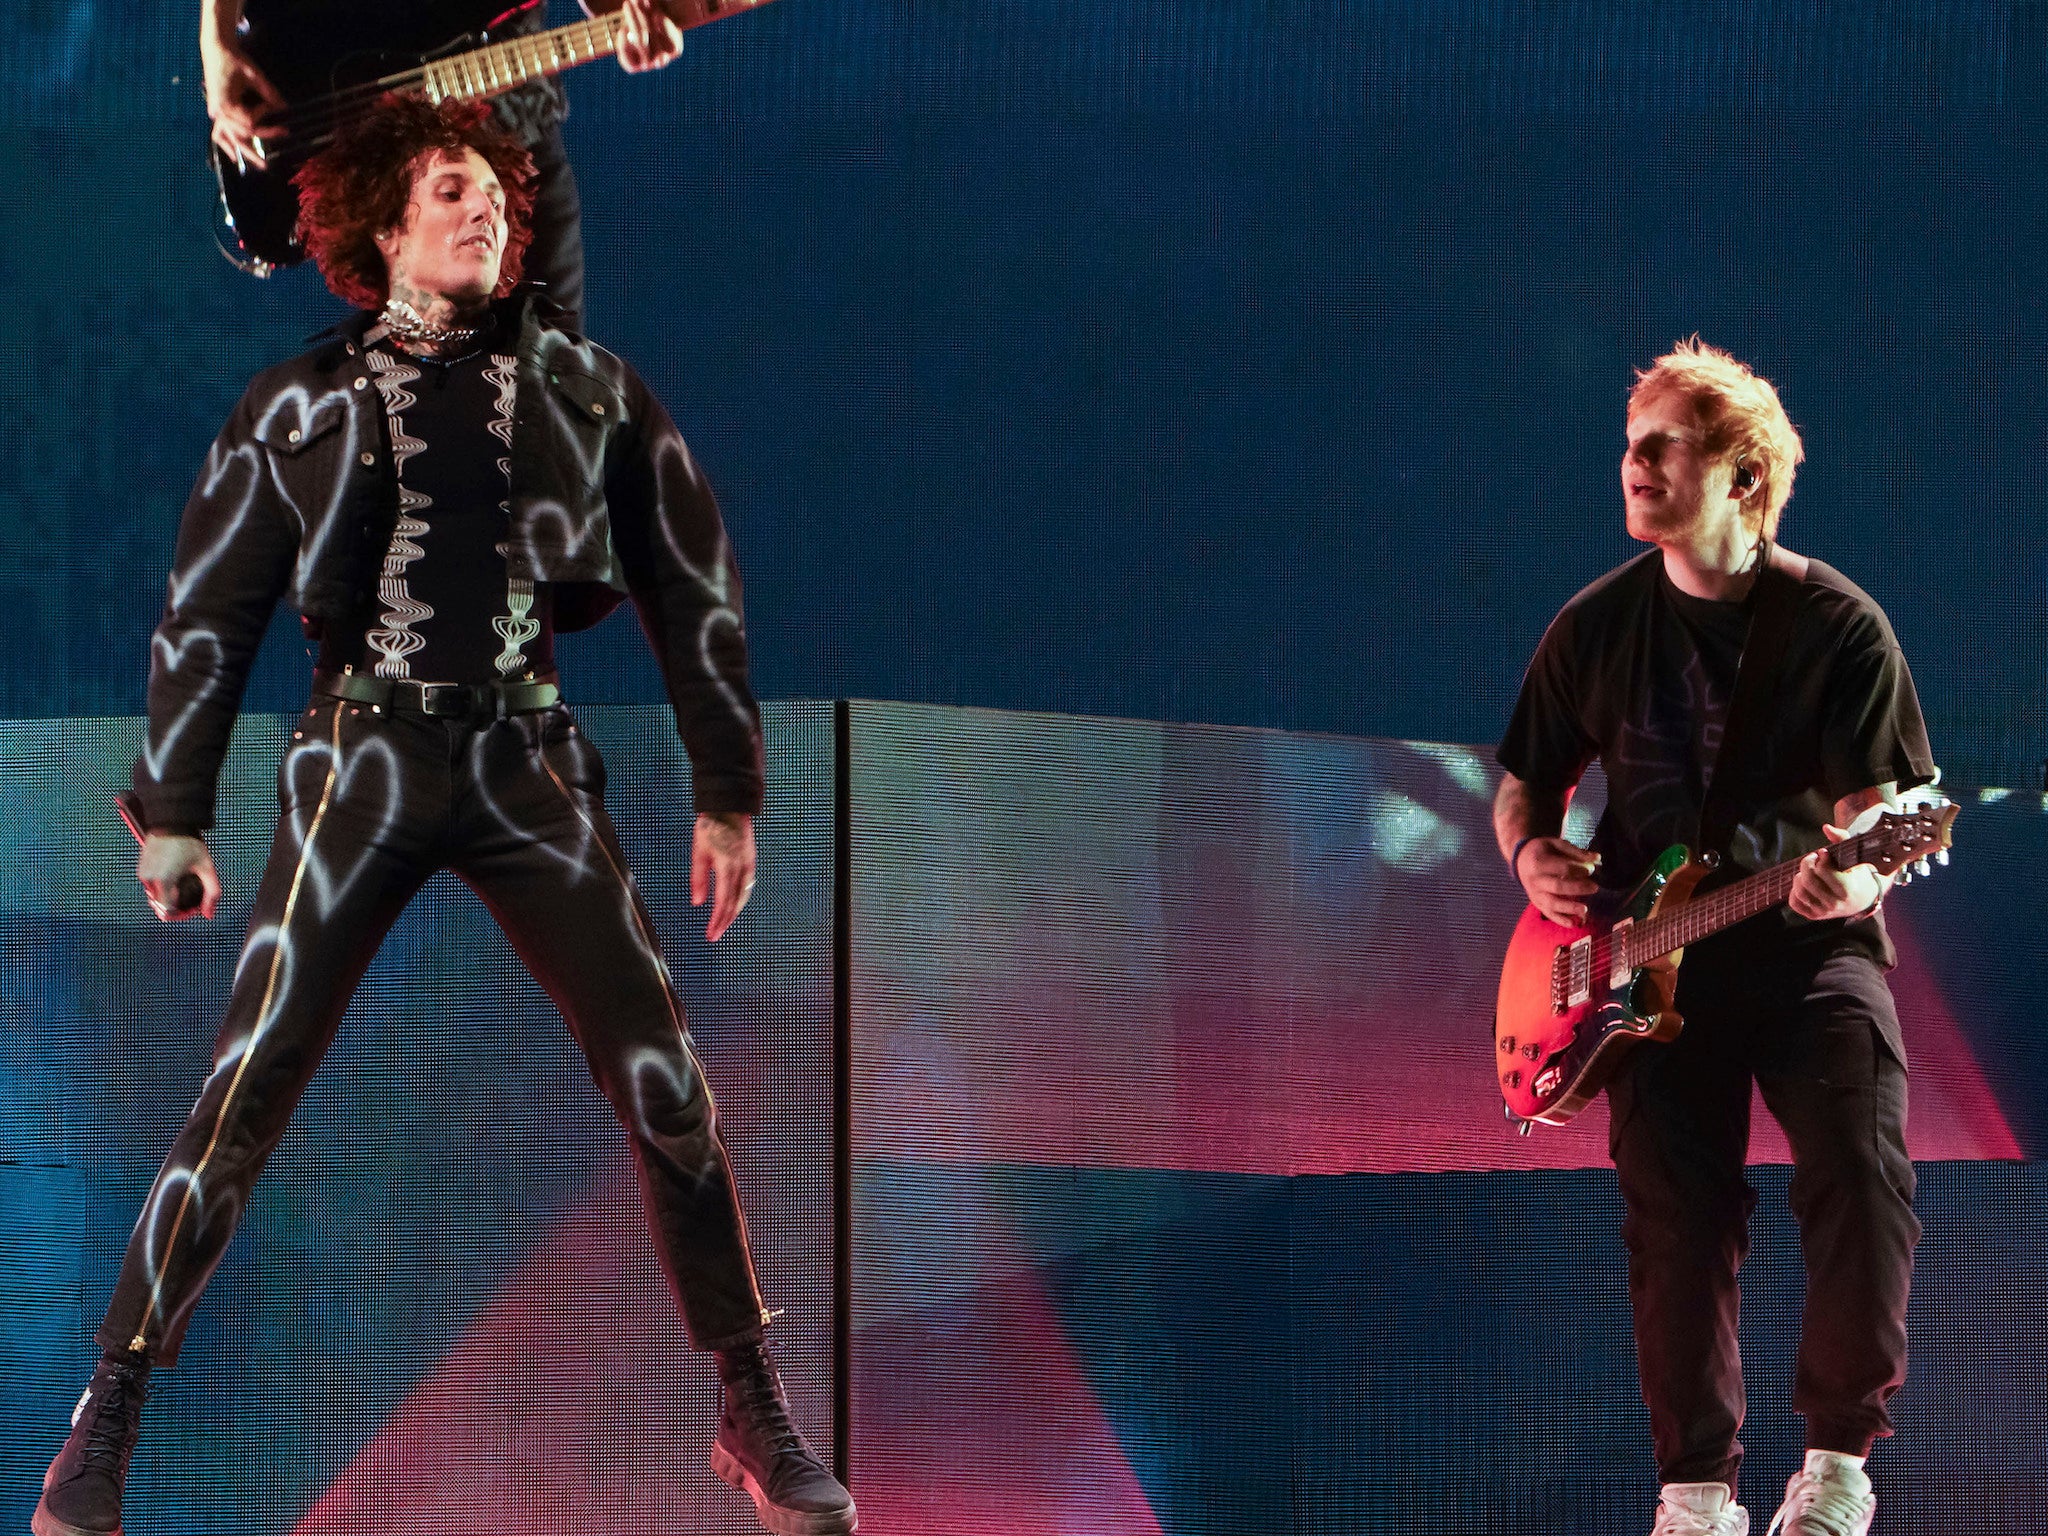 Bring Me The Horizon and Ed Sheeran perform at the Reading Music Festival